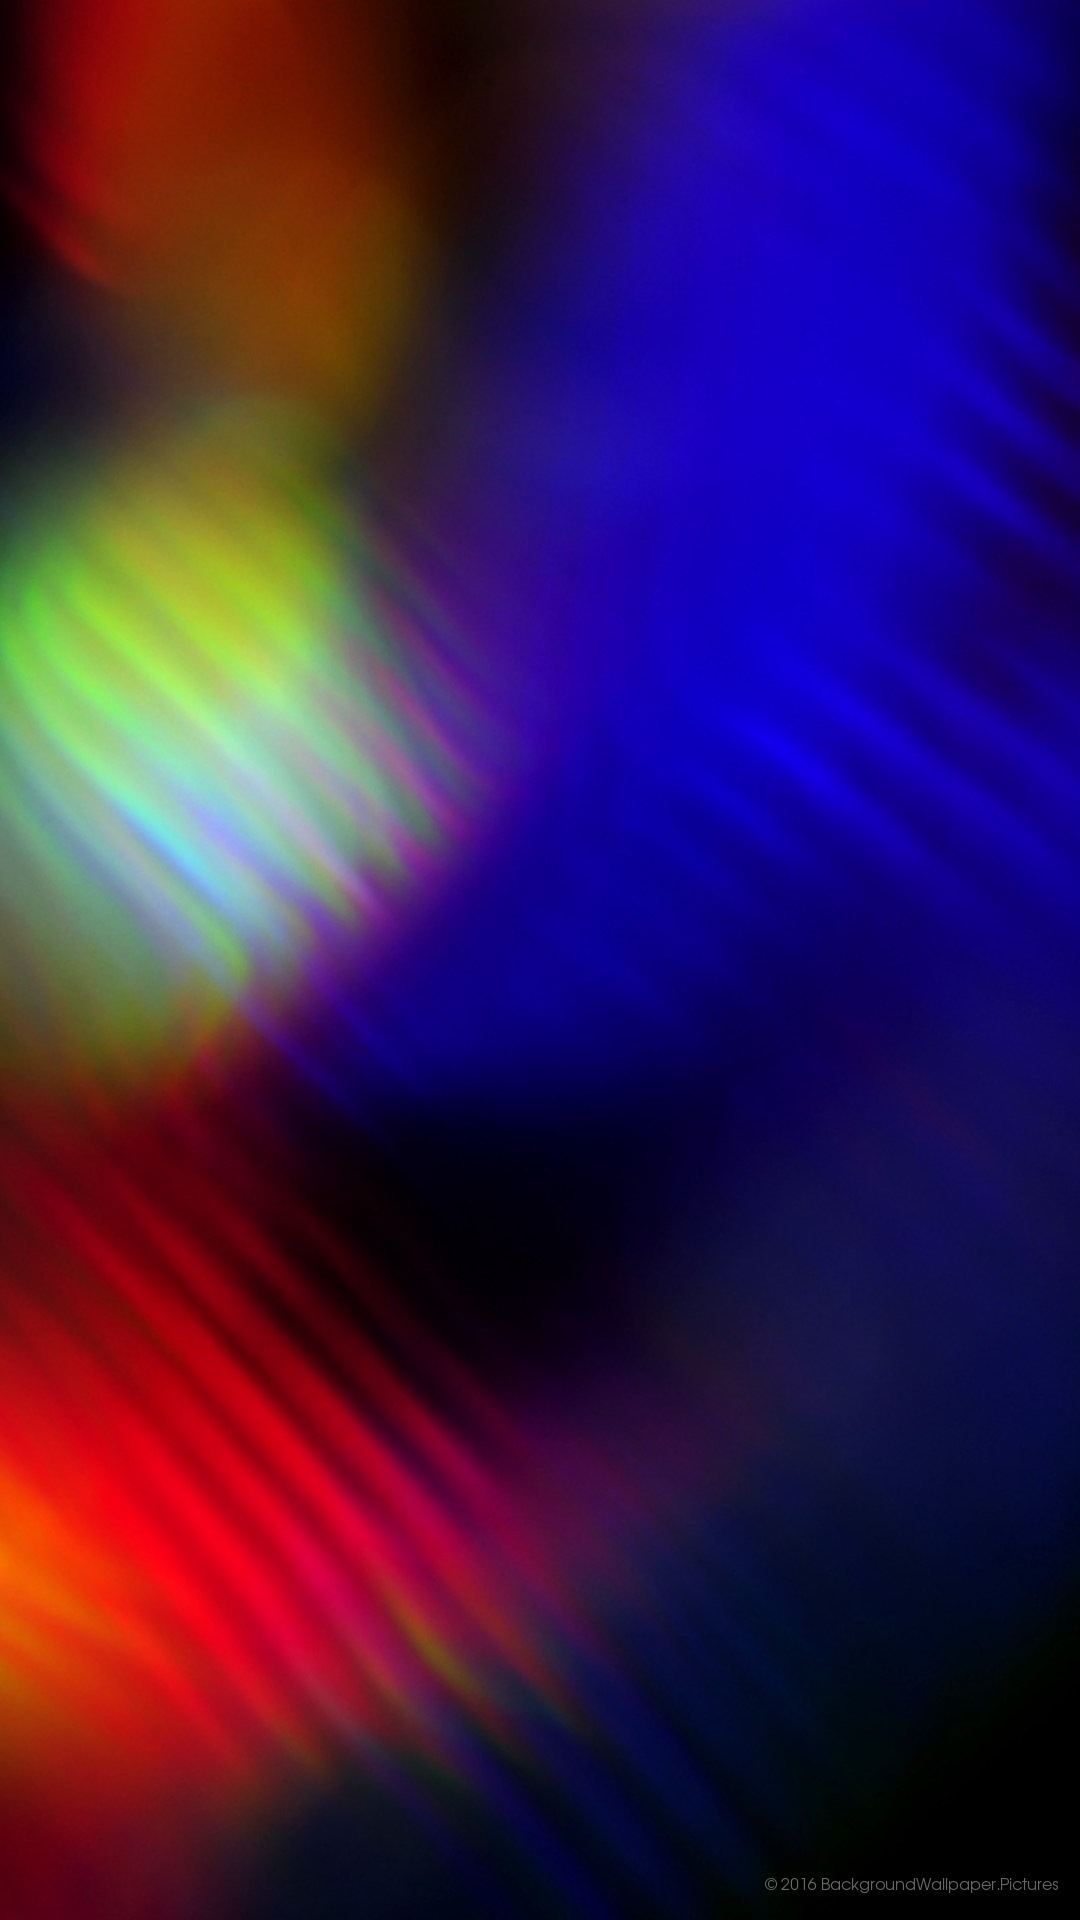 galaxy note 3 fondo de pantalla hd 1080p,azul,violeta,ligero,púrpura,colorido